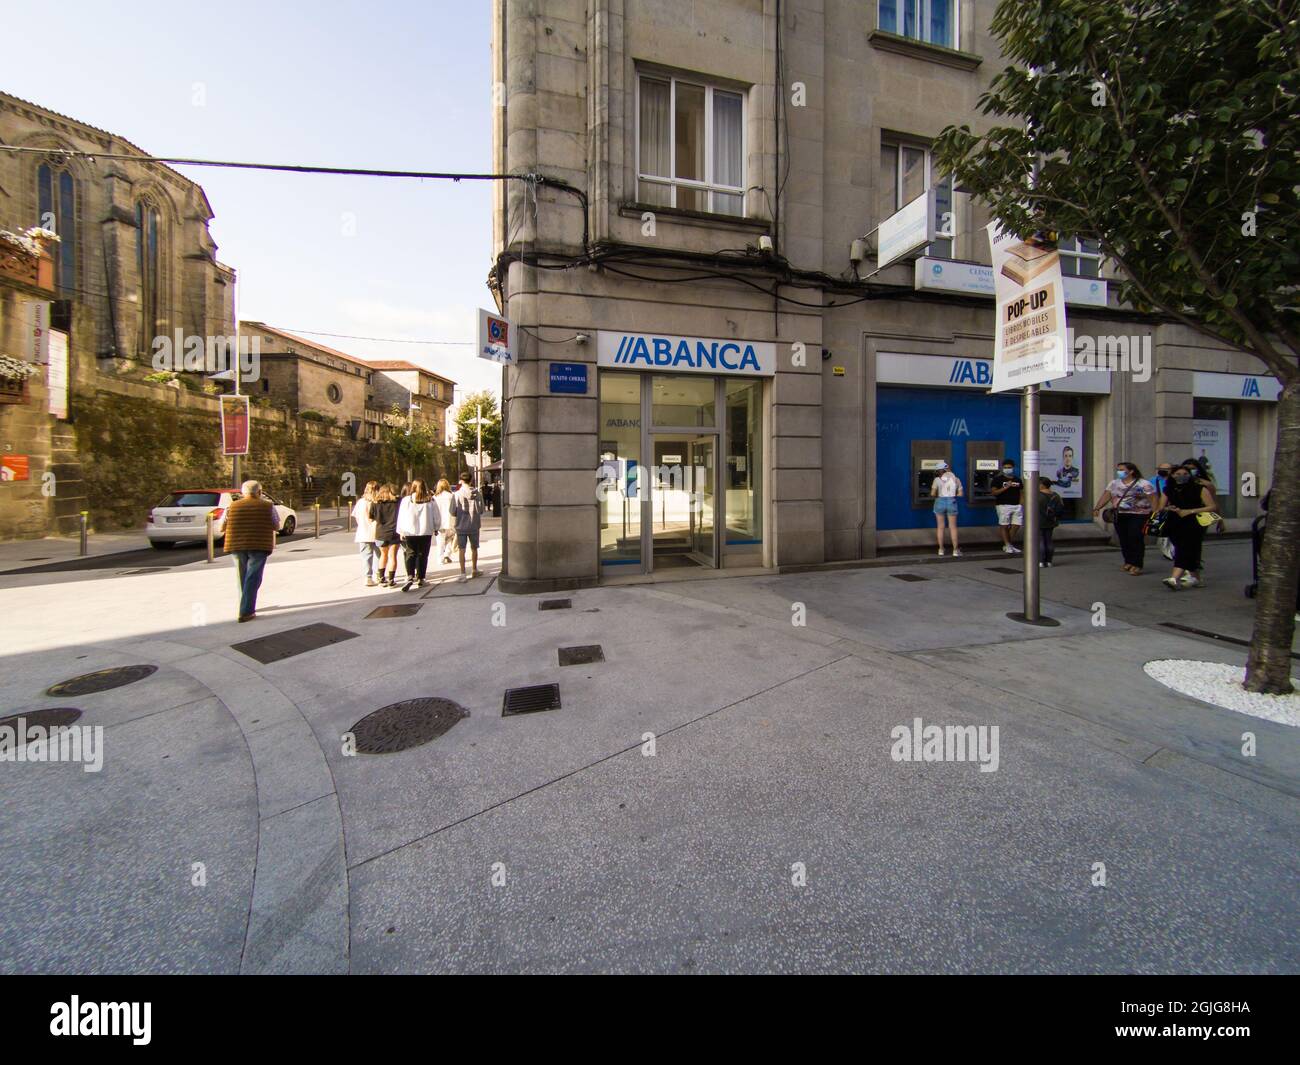 VIGO, ESPAÑA - 23 de agosto de 2021: La fachada de la tienda ABANCA Vigo, España Fotografía de stock - Alamy